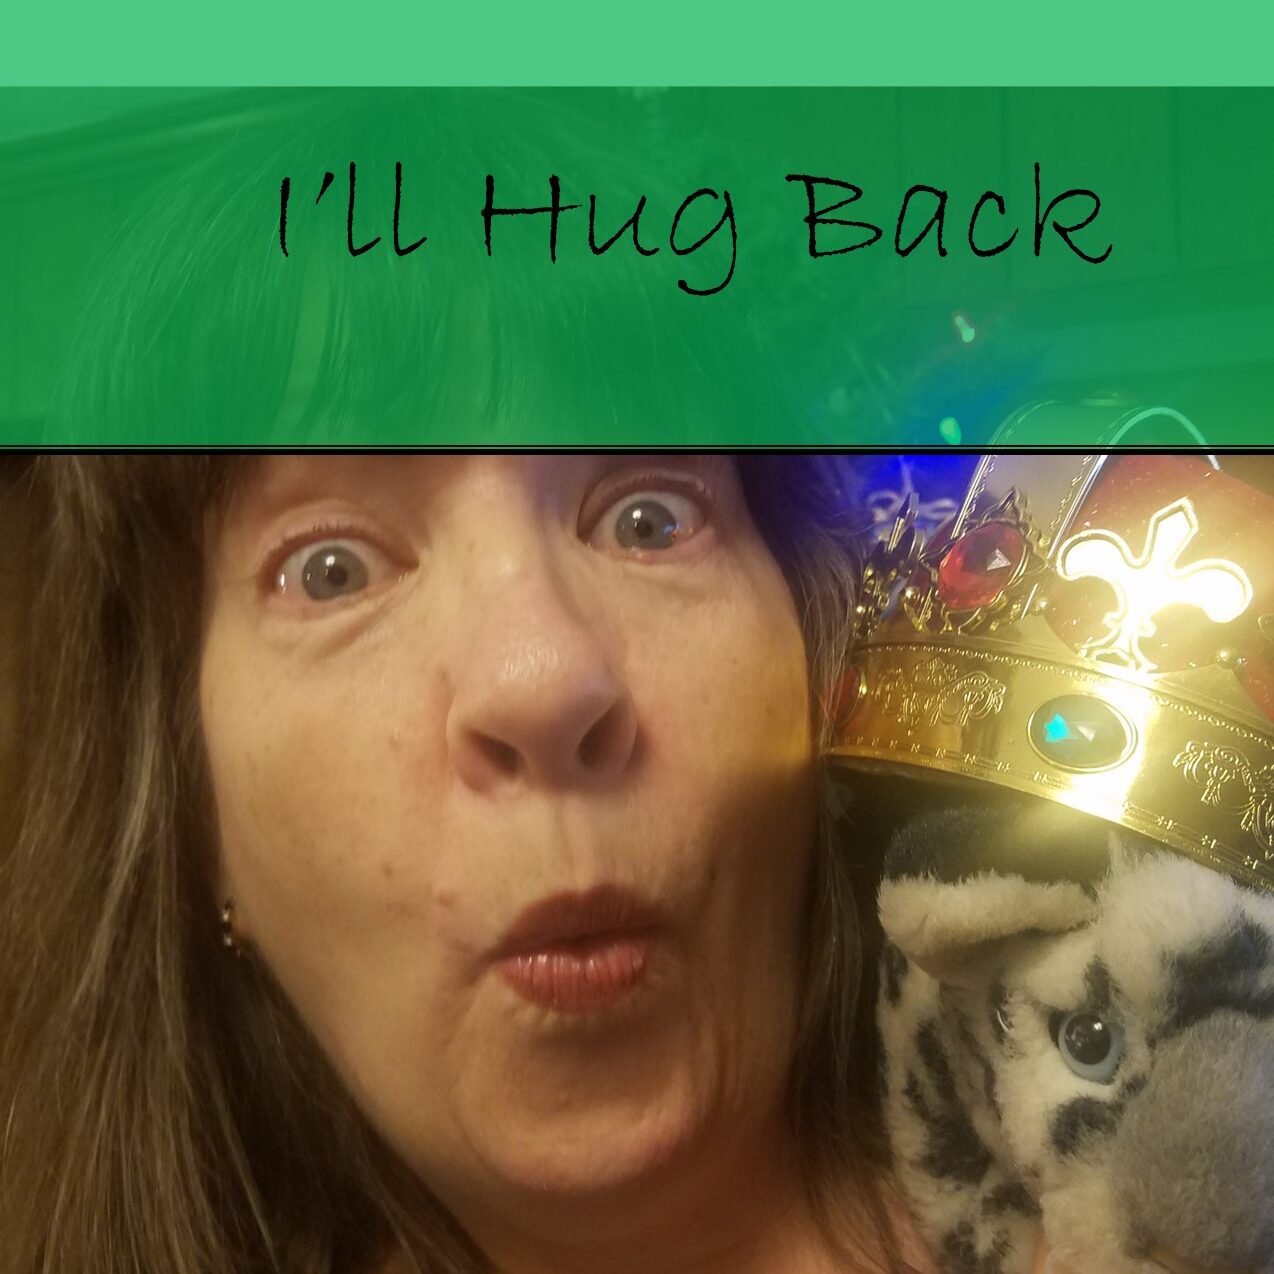 I’ll Hug Back (thank you, Hamilton / Lin Manuel Miranda!)